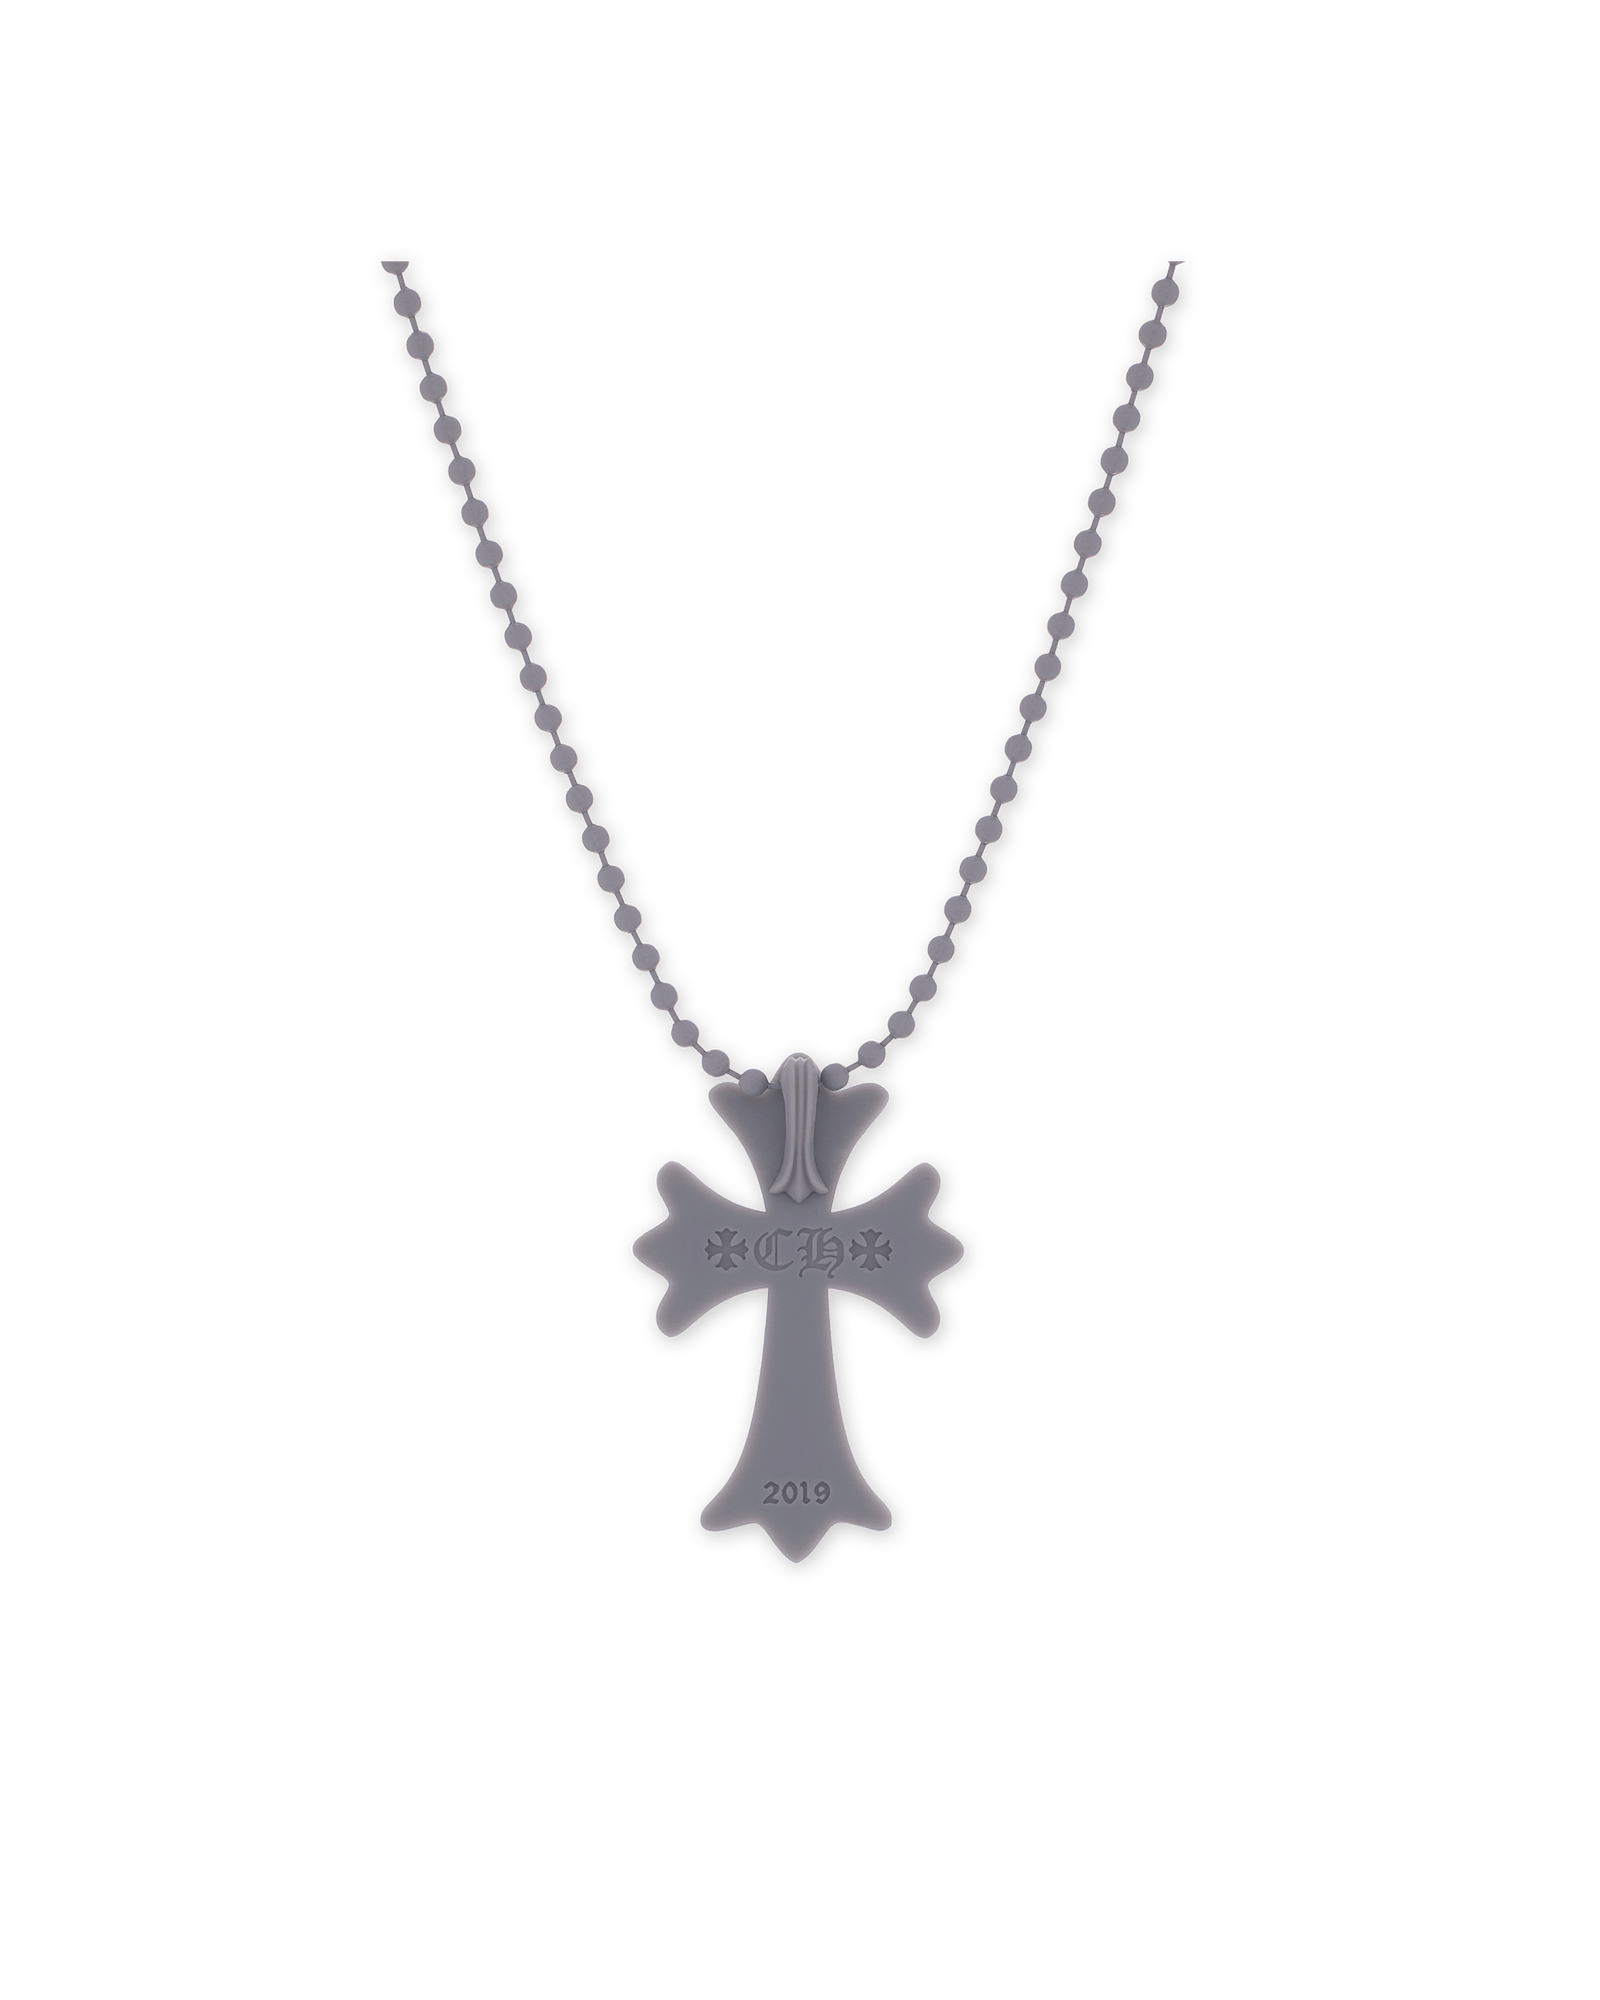 chrome hearts Silicon cross necklace | eBay